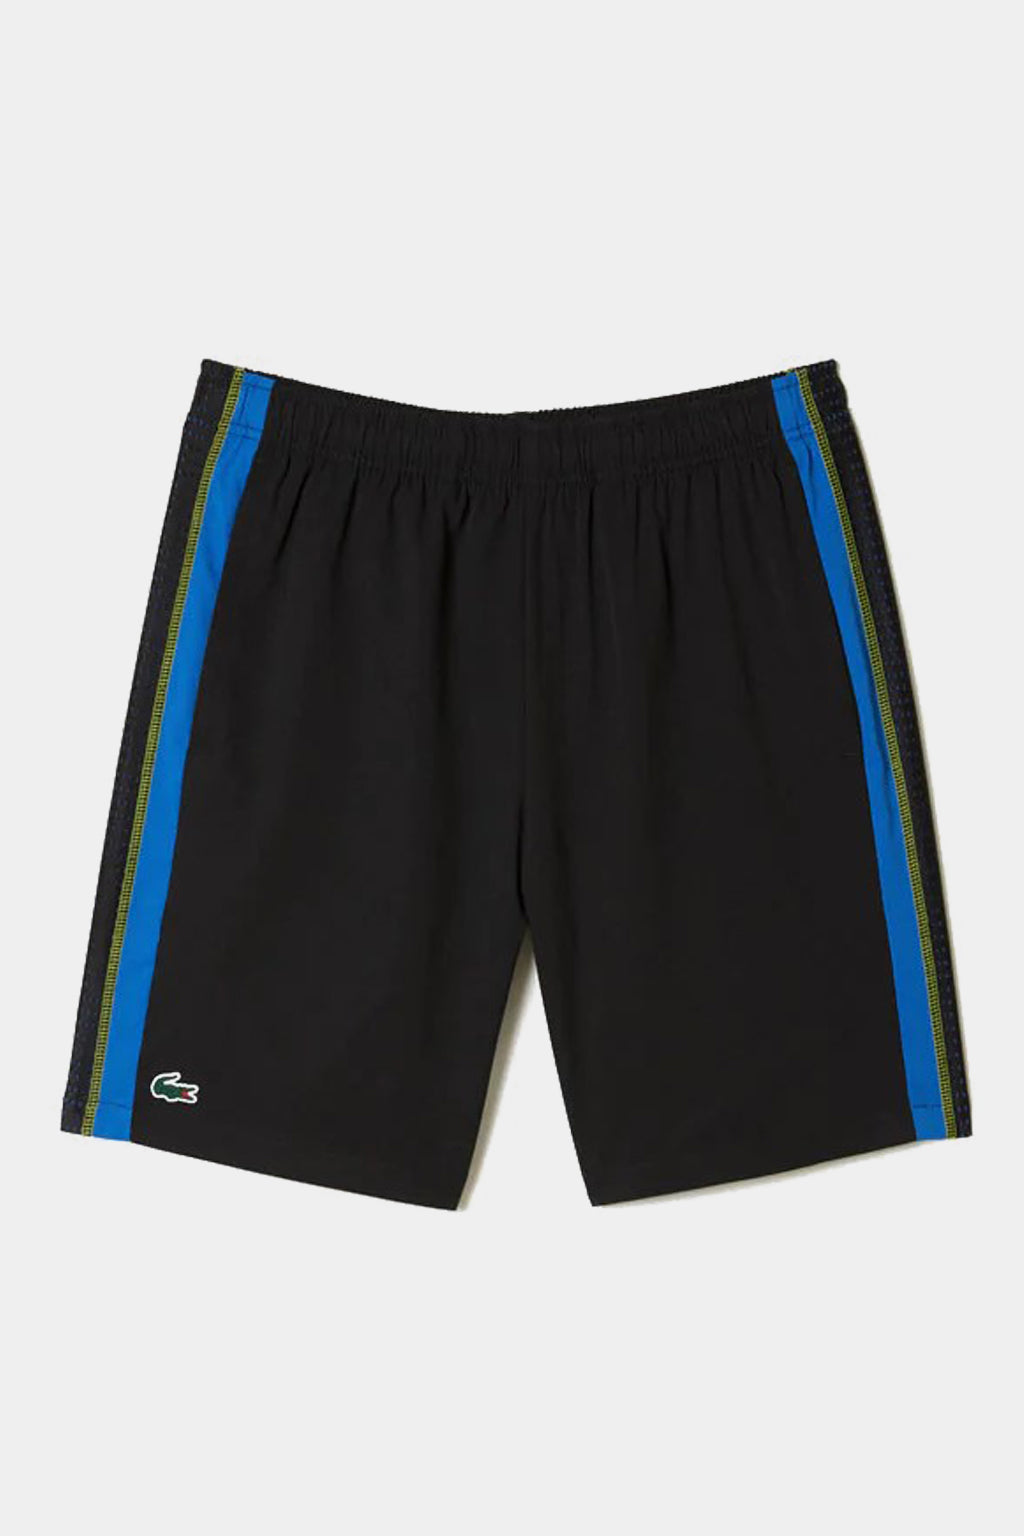 Lacoste - Lacoste Men's Striped Tennis Shorts